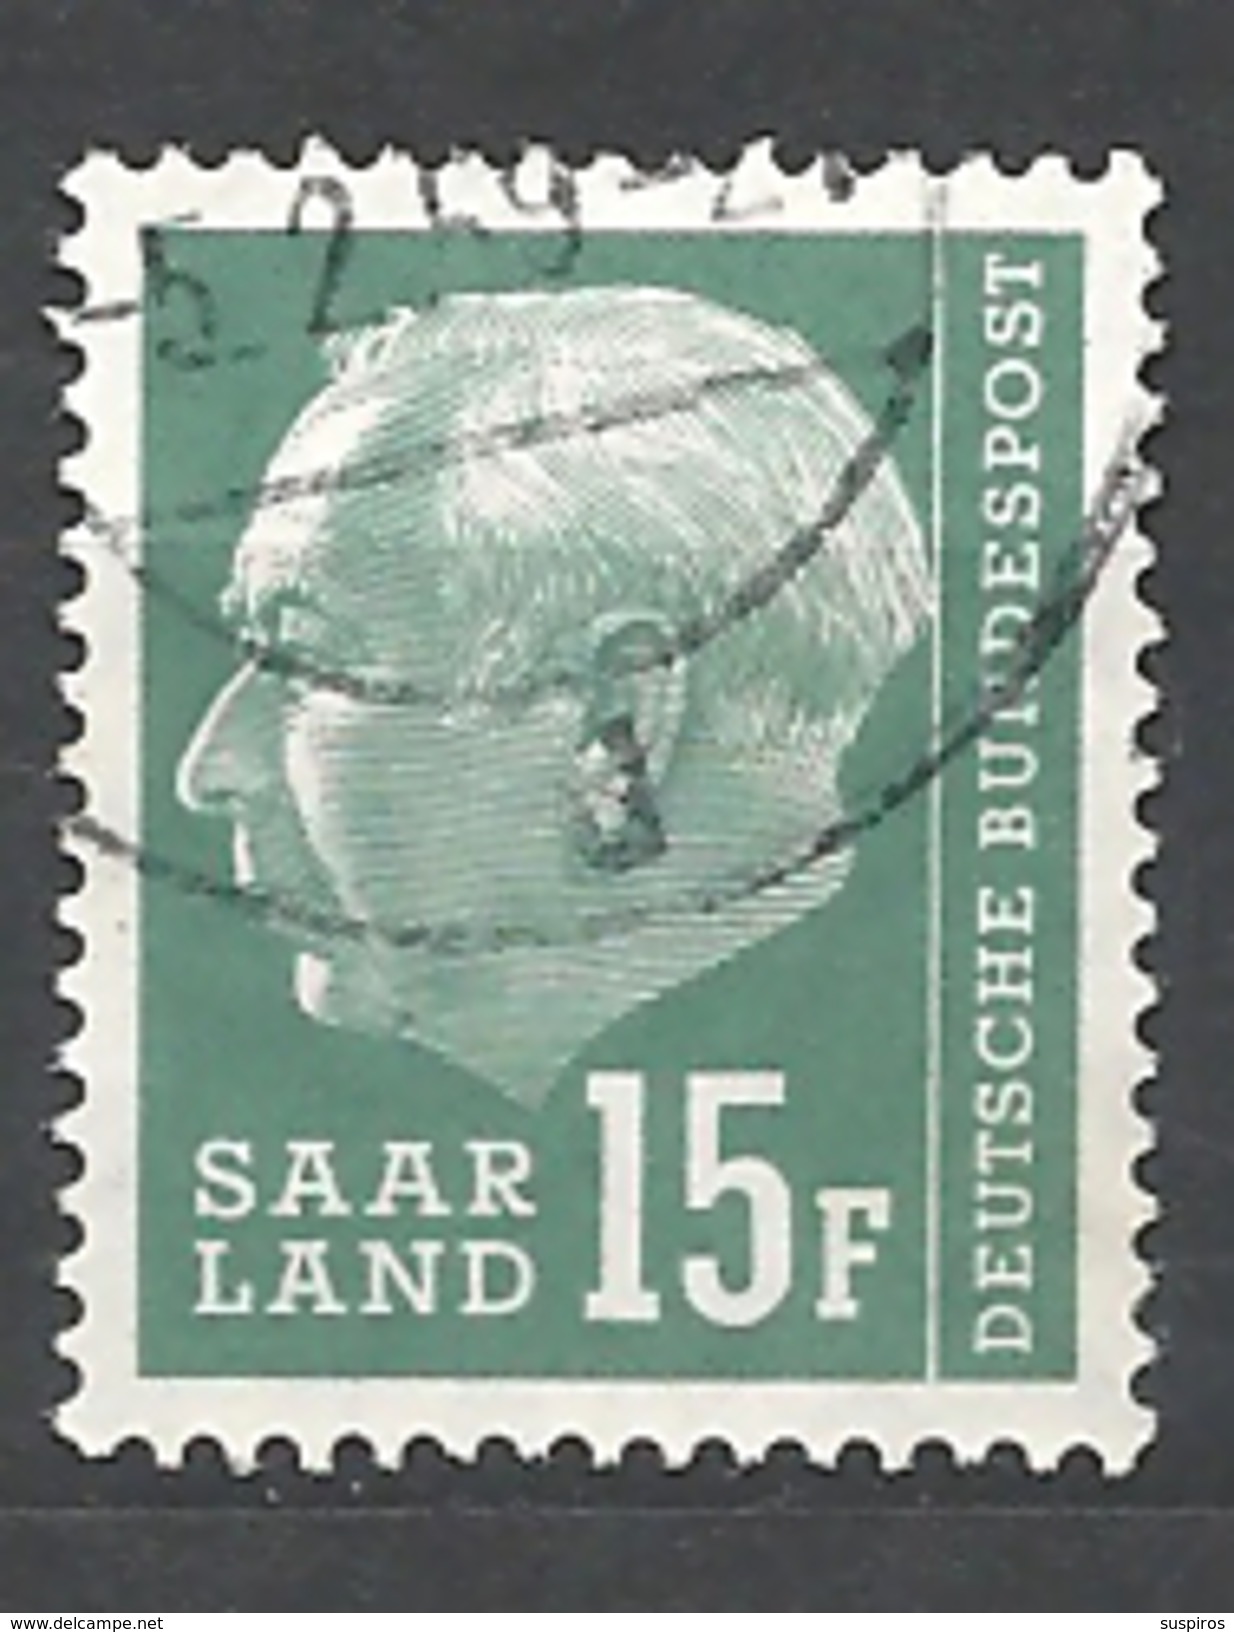 SARRLAND 1957 Federal President Theodor Heuss, 1884-1963   USED - Gebraucht